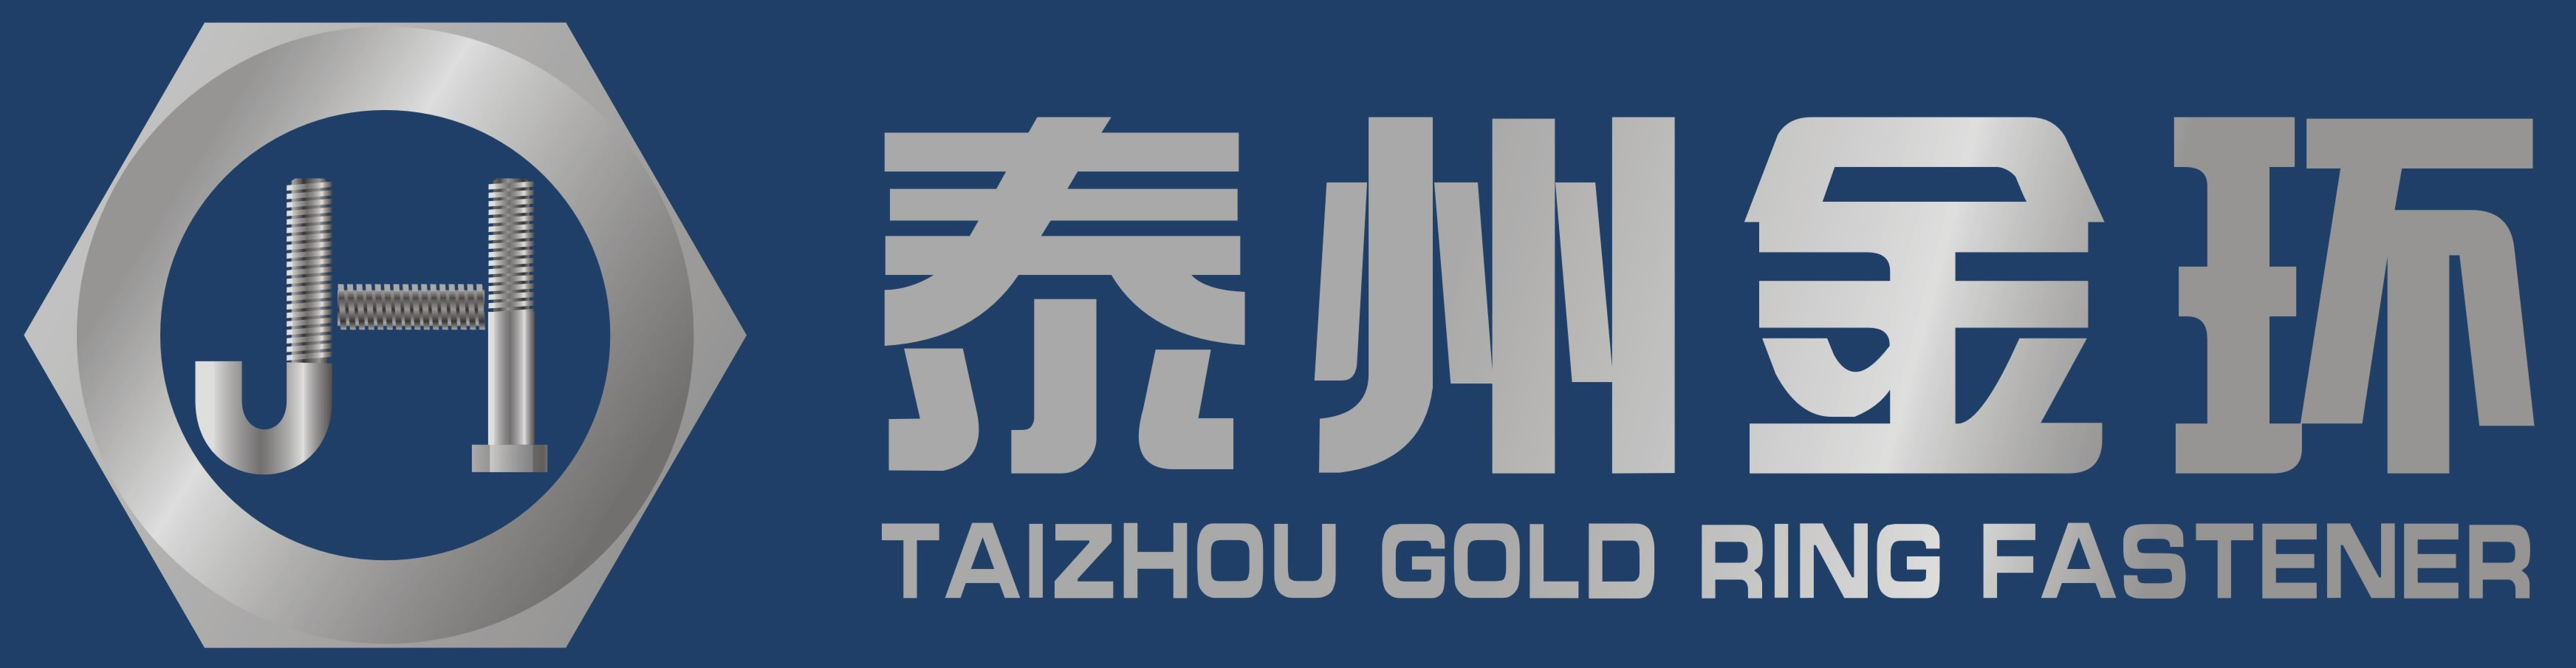 TAIZHOU GOLD RING FASTENER CO., LTD